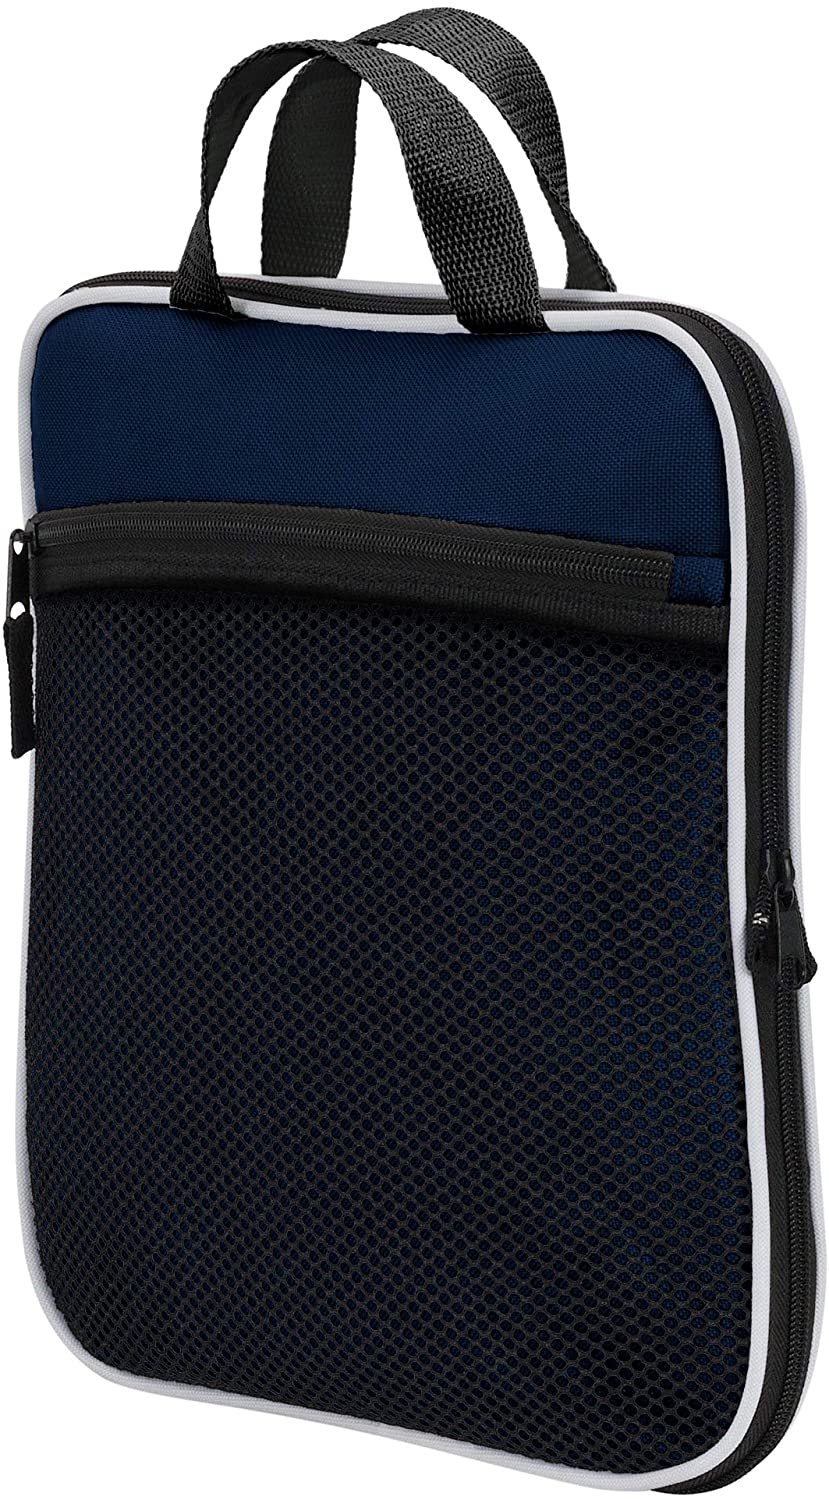 Washington Capitals Premium Duffel Bag Steal Design 28x11x12 Inch, Fold Up Zipper Design